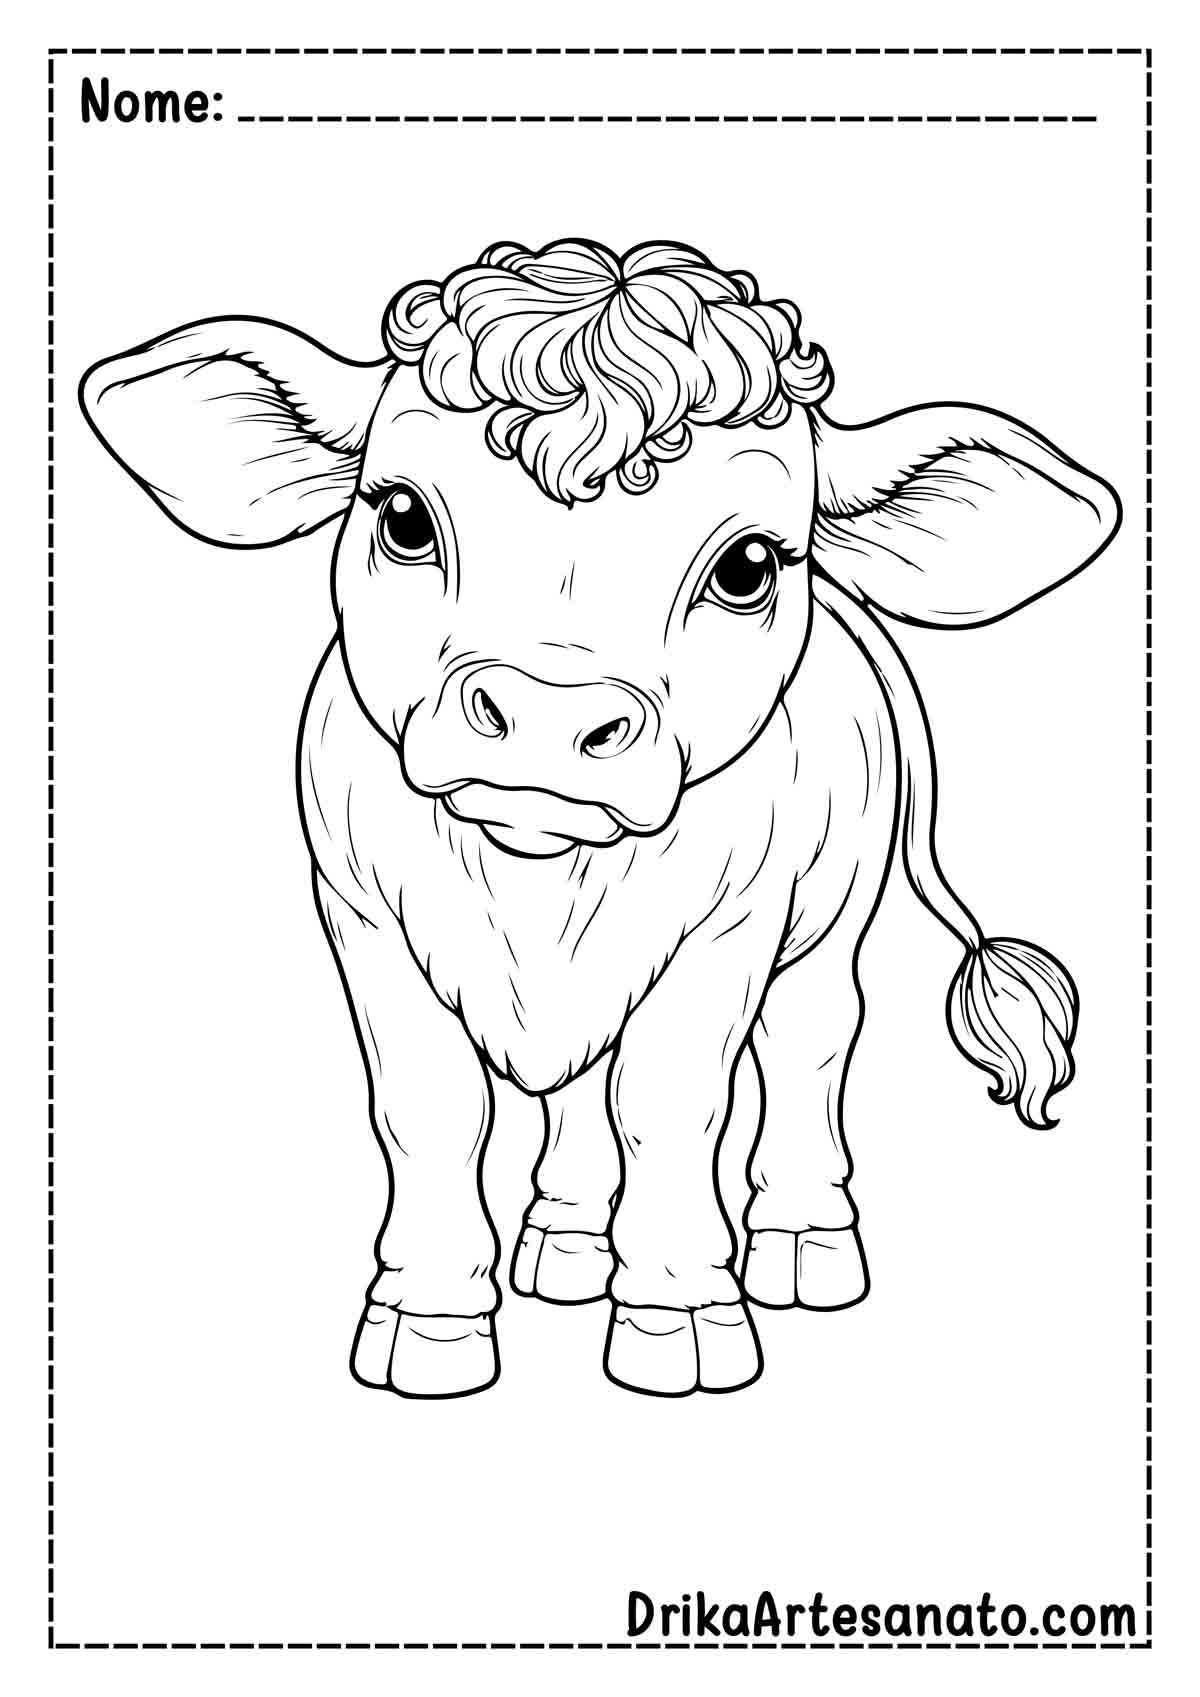 Desenho de Vaca Realista para Colorir e Imprimir